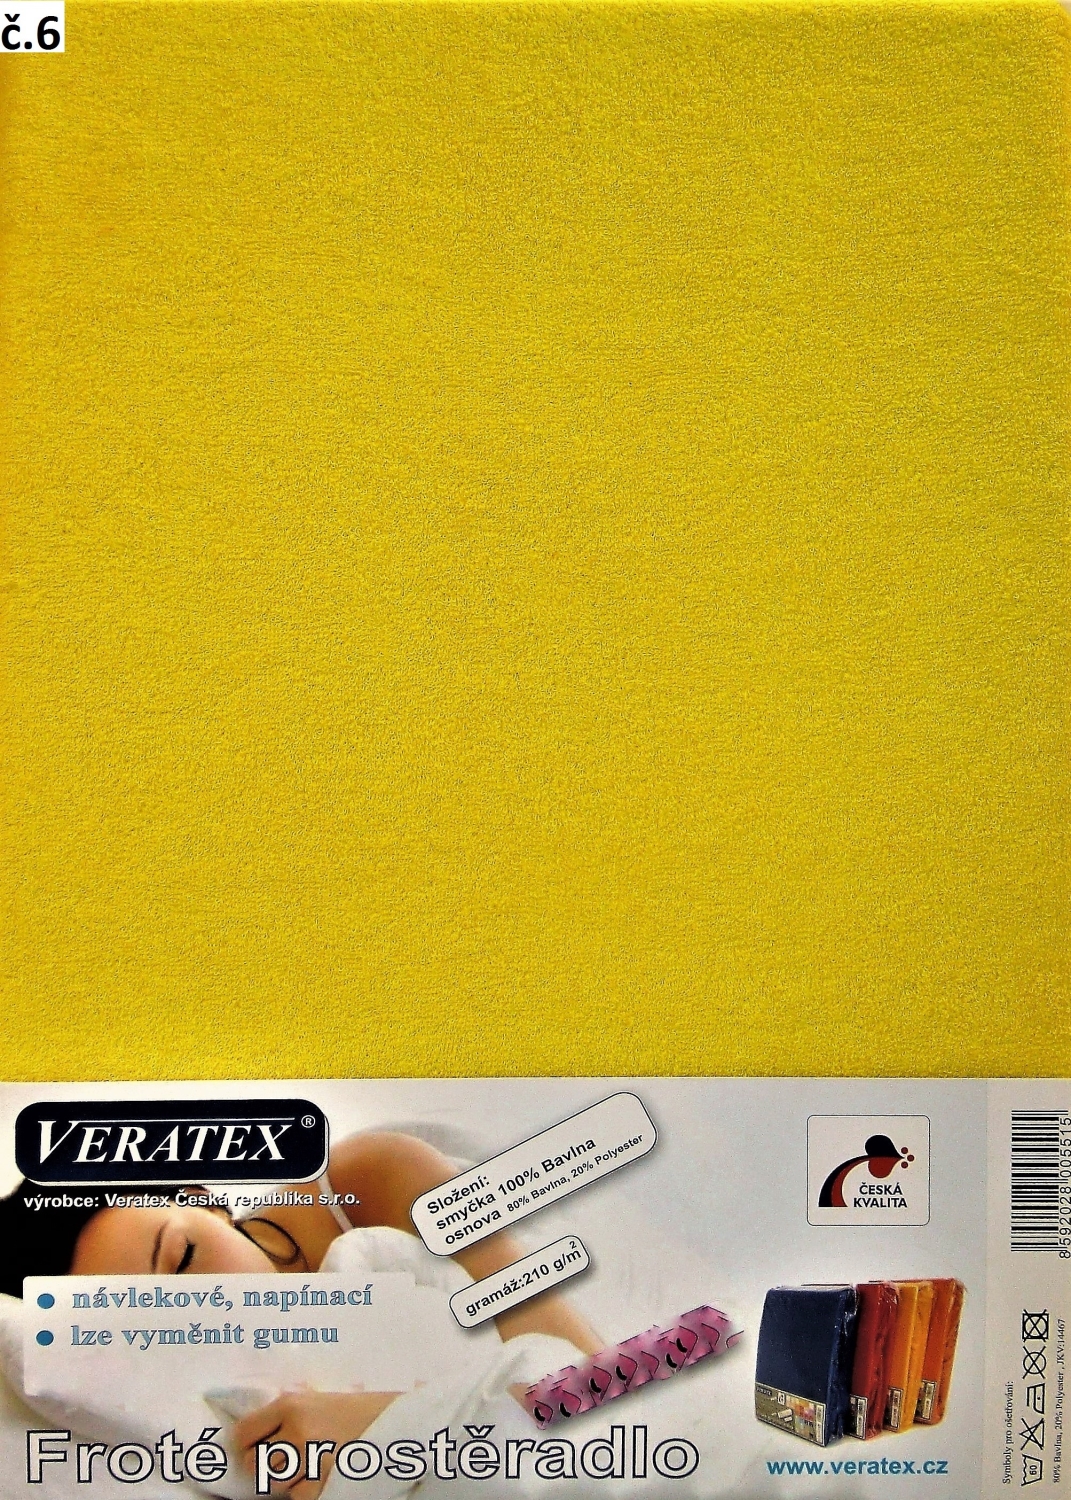 Veratex Froté prostěradlo 80 x 160 cm (č. 6-stř.žlutá) 80 x 160 cm